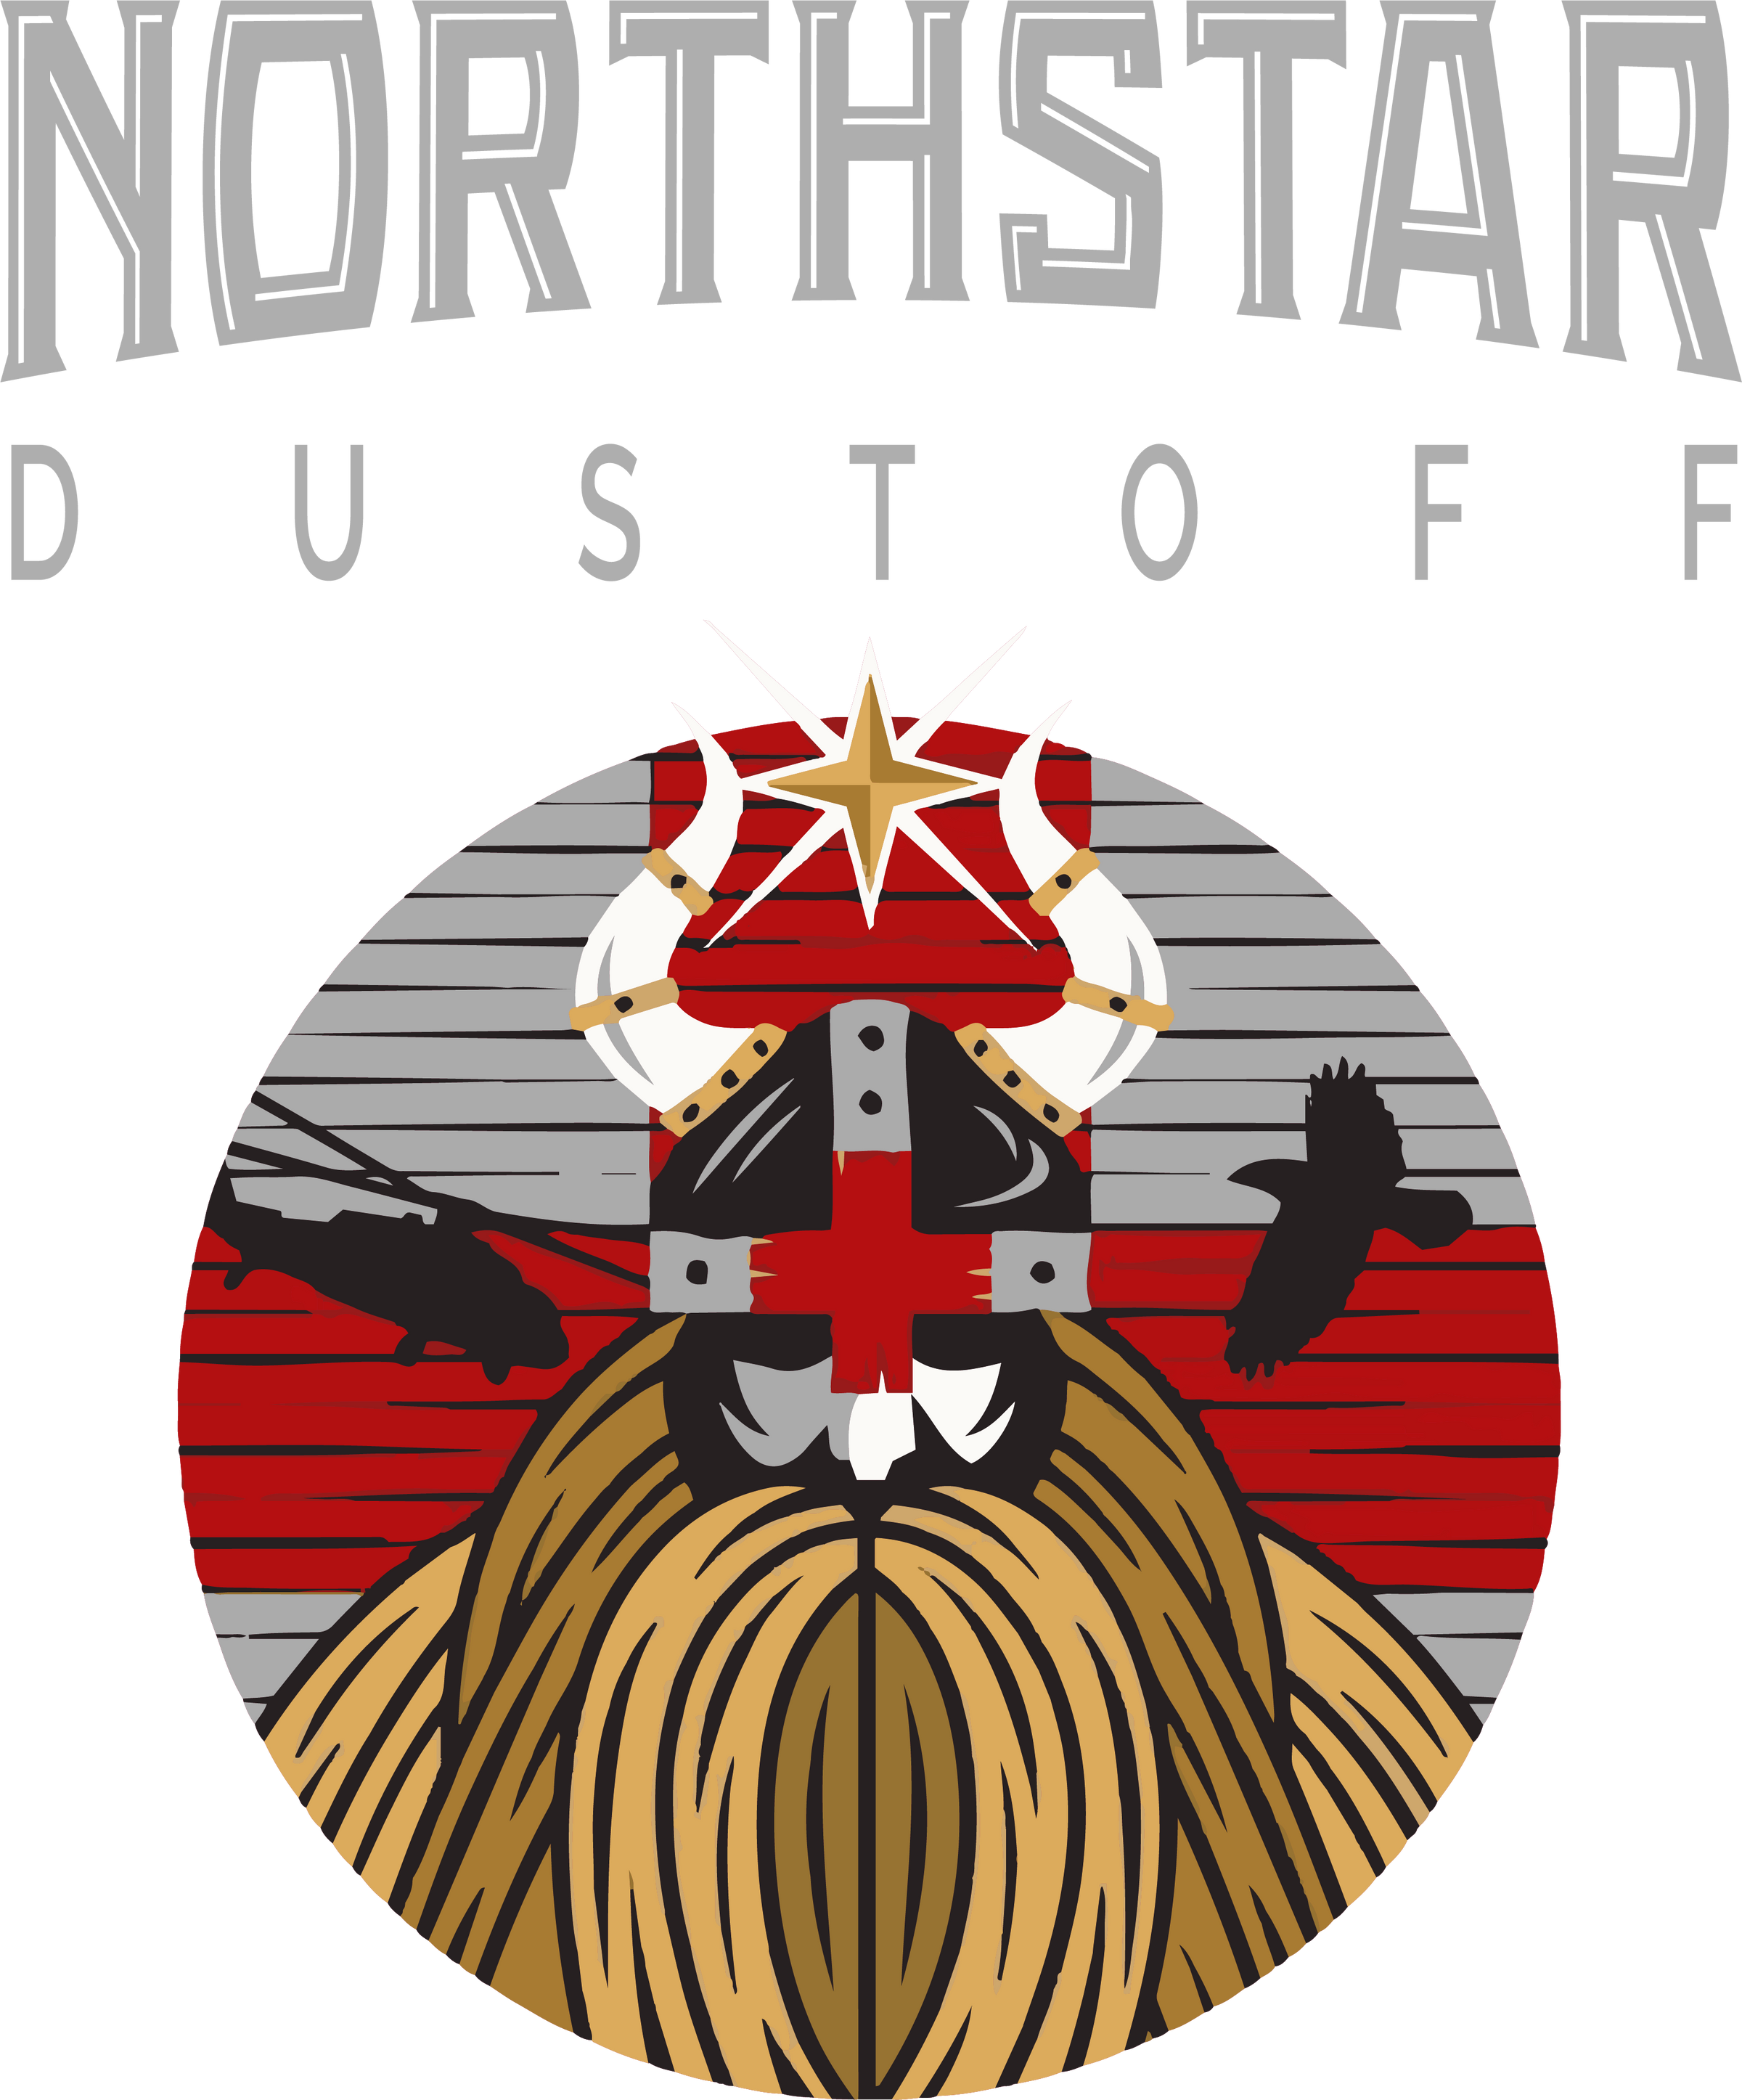 Northstar Dustoff - 5 Dec 2019